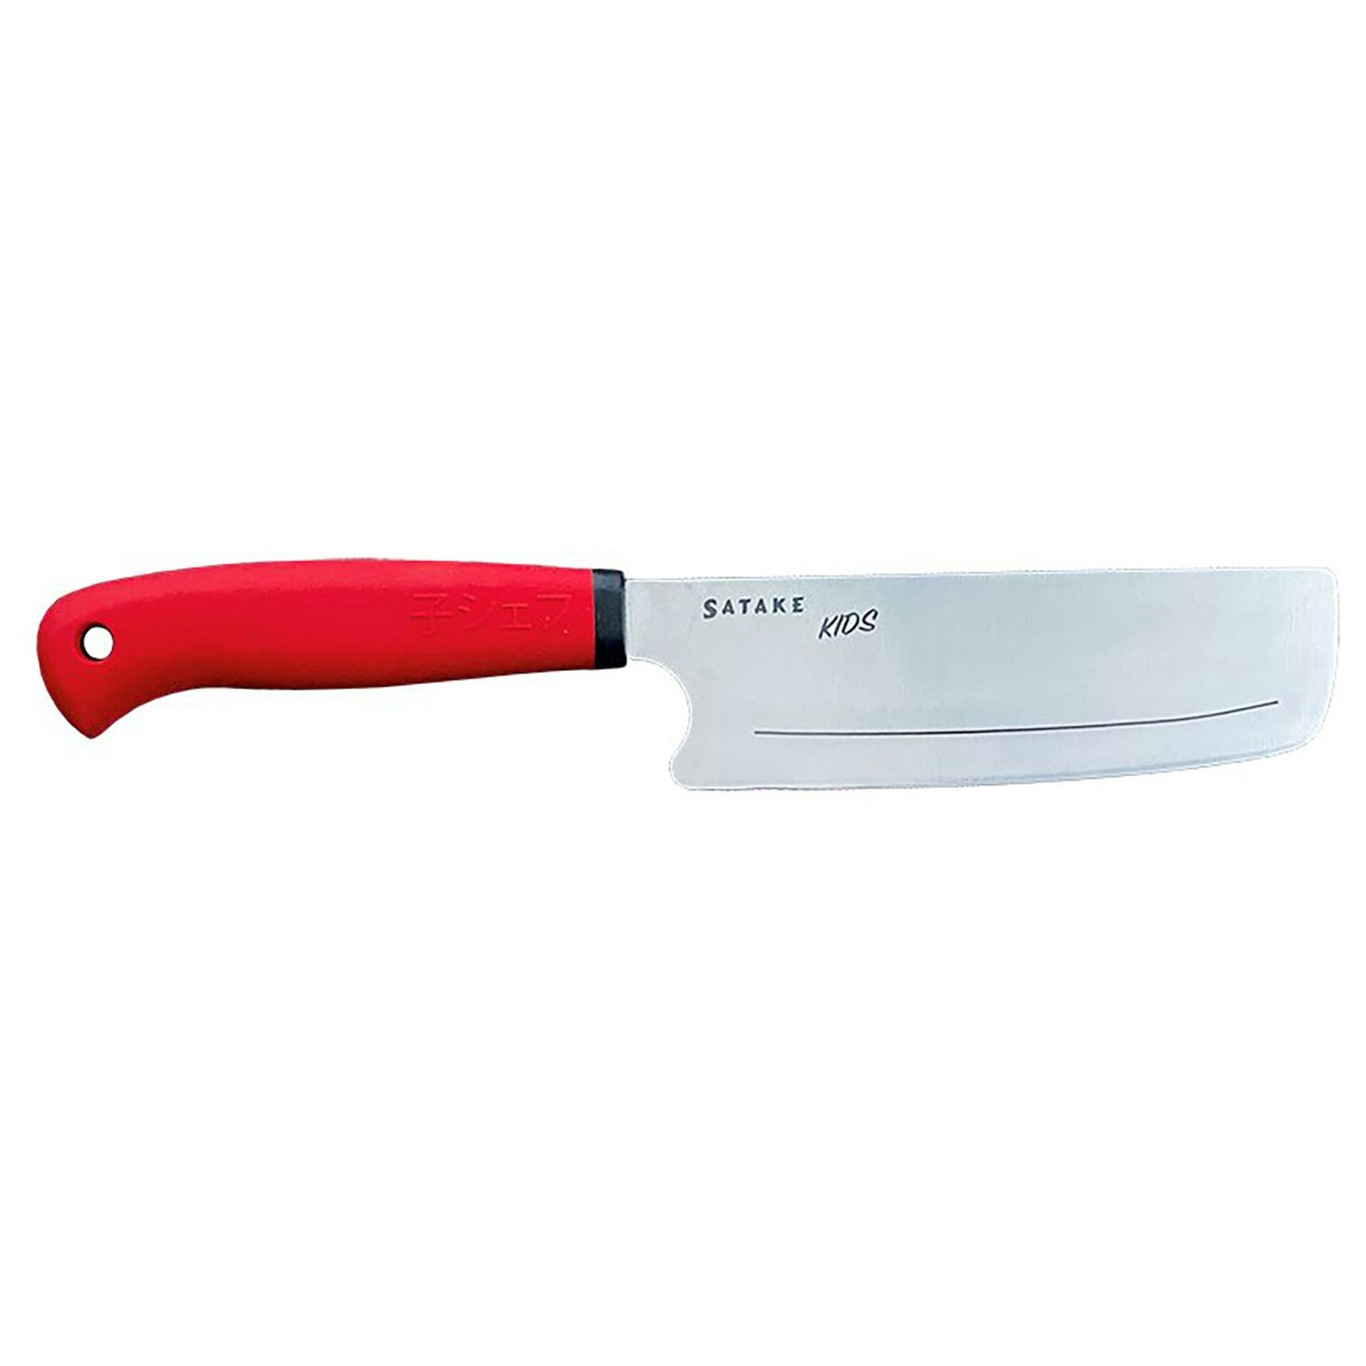 https://royaldesign.com/image/2/satake-kids-knife-with-cut-resistant-glove-0?w=800&quality=80